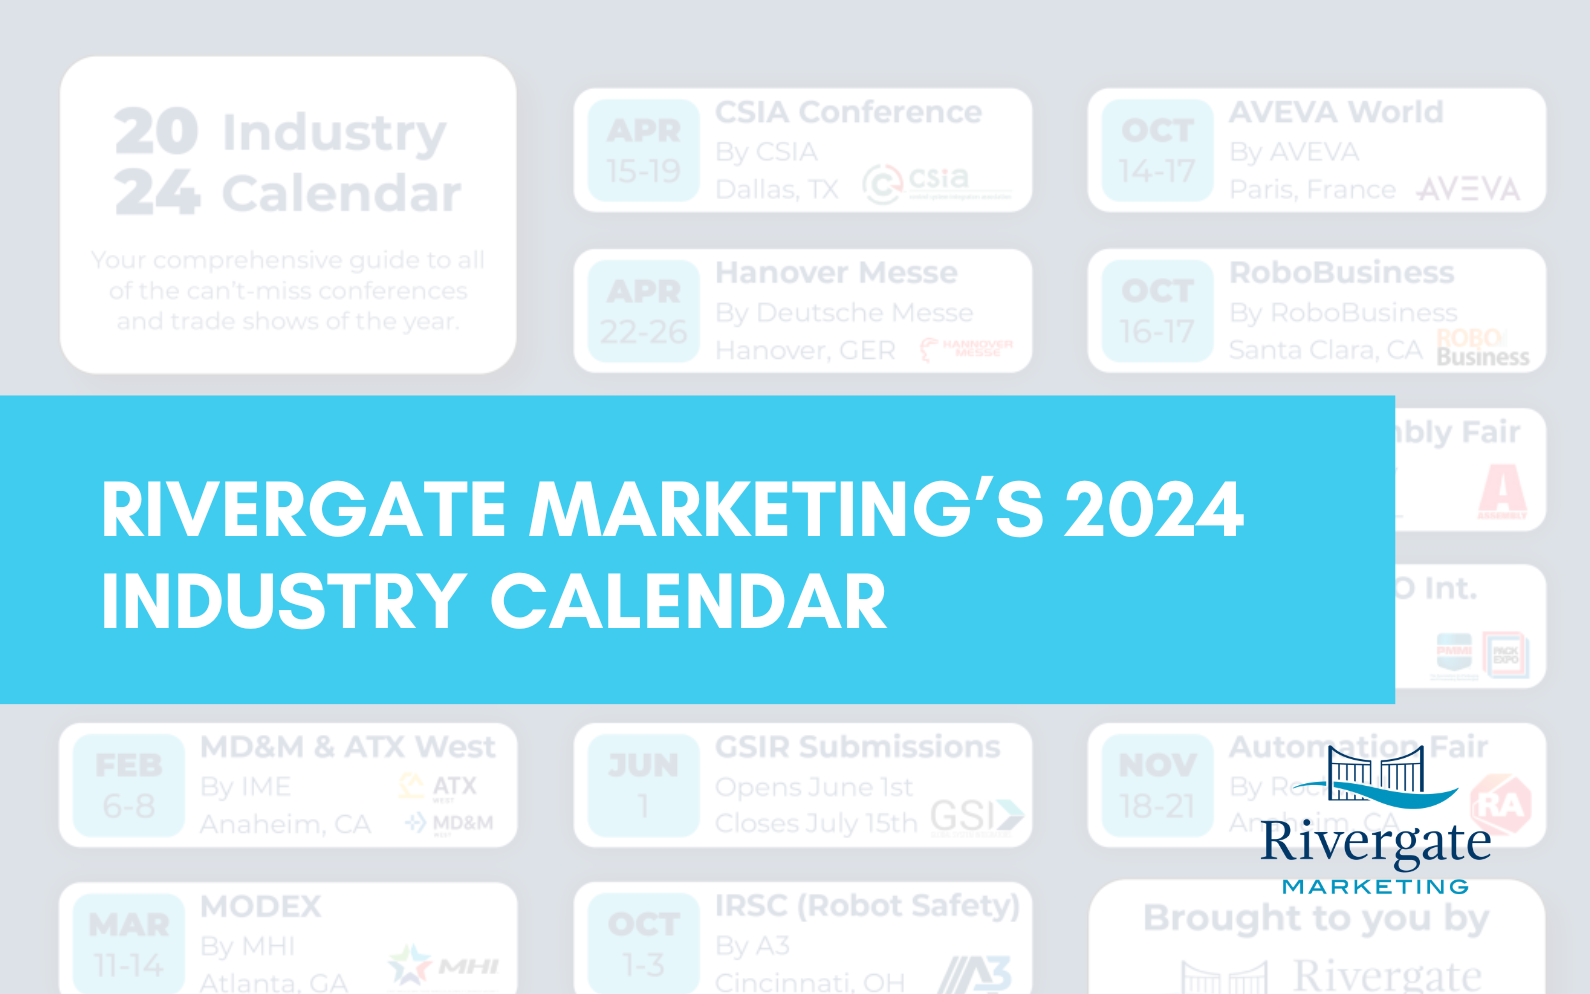 Rivergate Marketing 2024 industry calendar